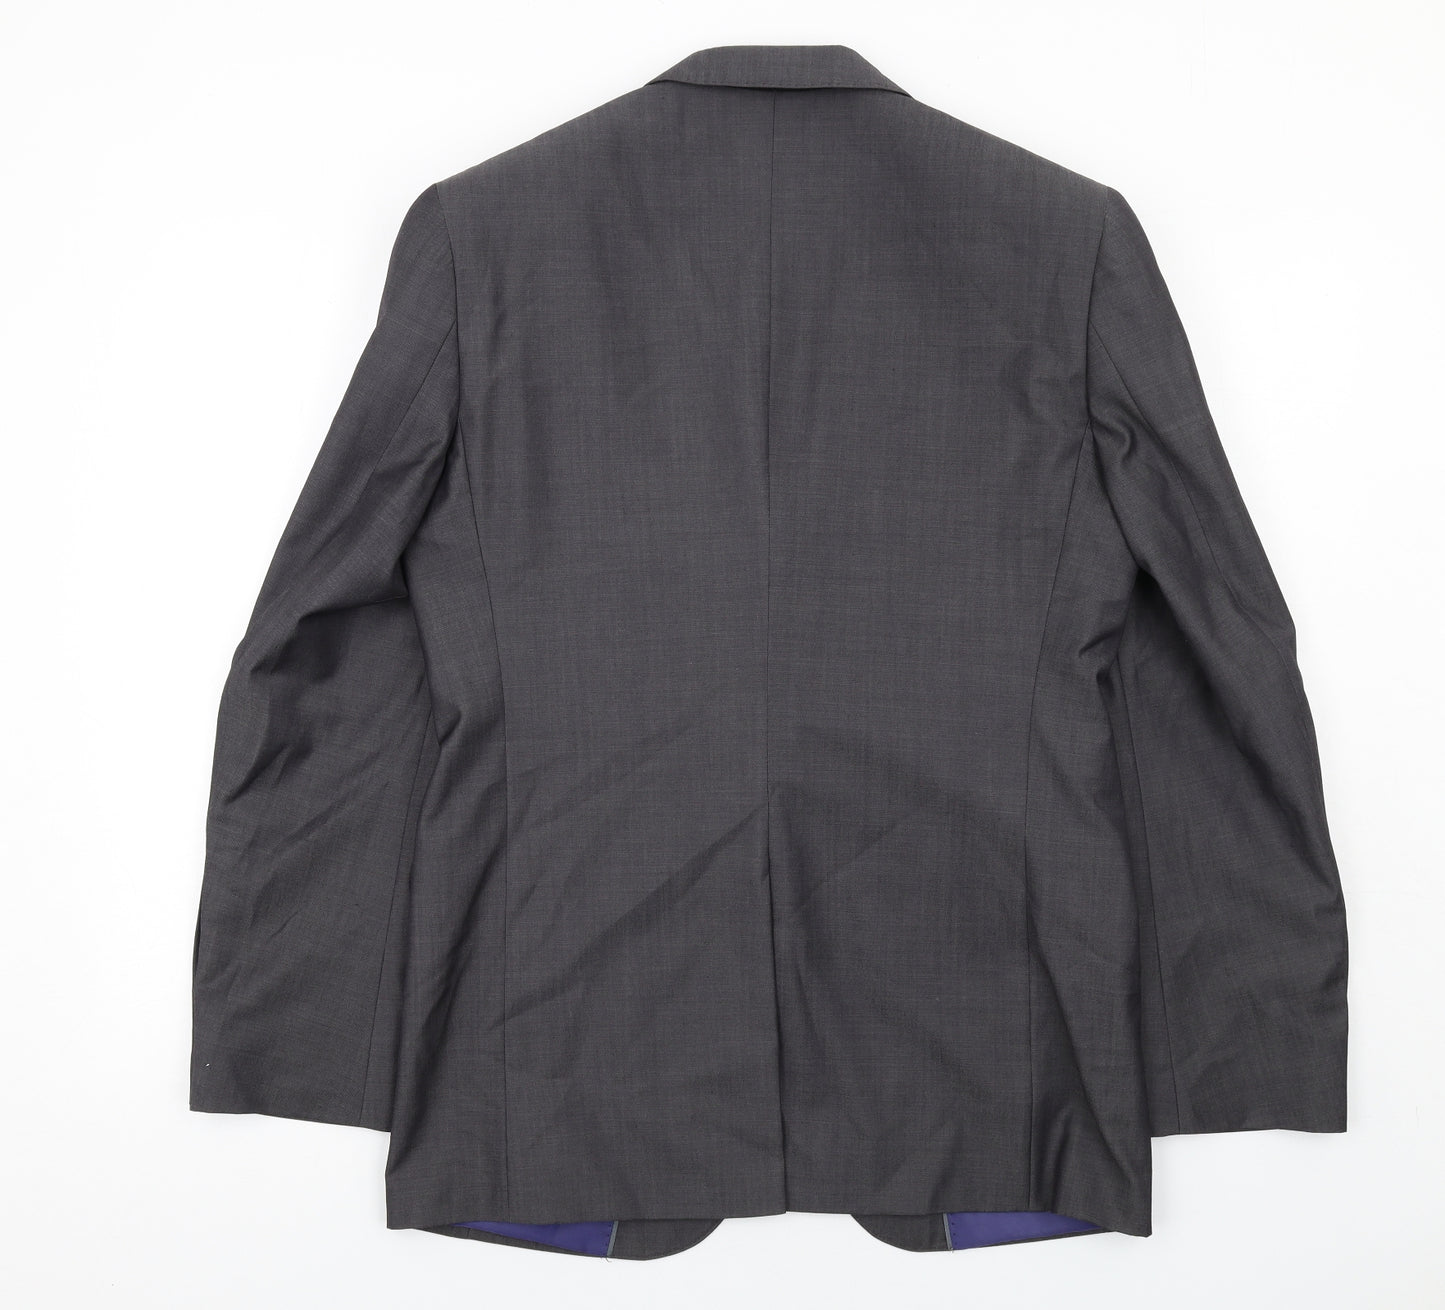 Autograph Mens Grey Wool Jacket Suit Jacket Size 38 Regular